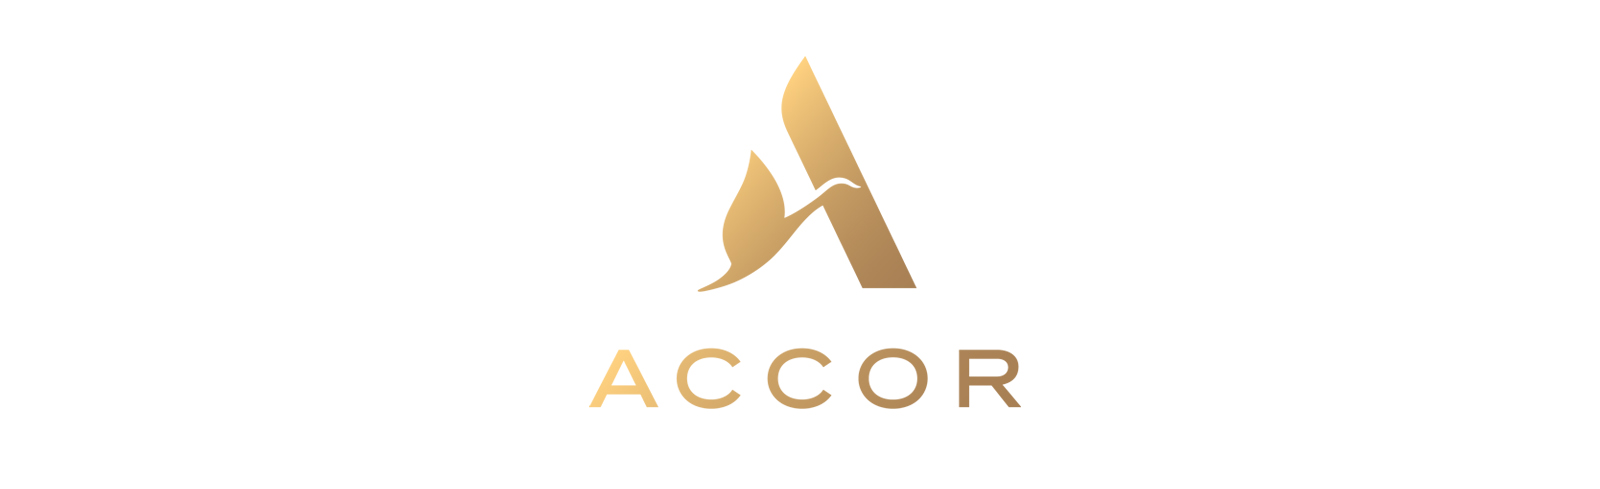 Accor_Webinar_ABC-Site_Header_Placeholder_1600x489 copy